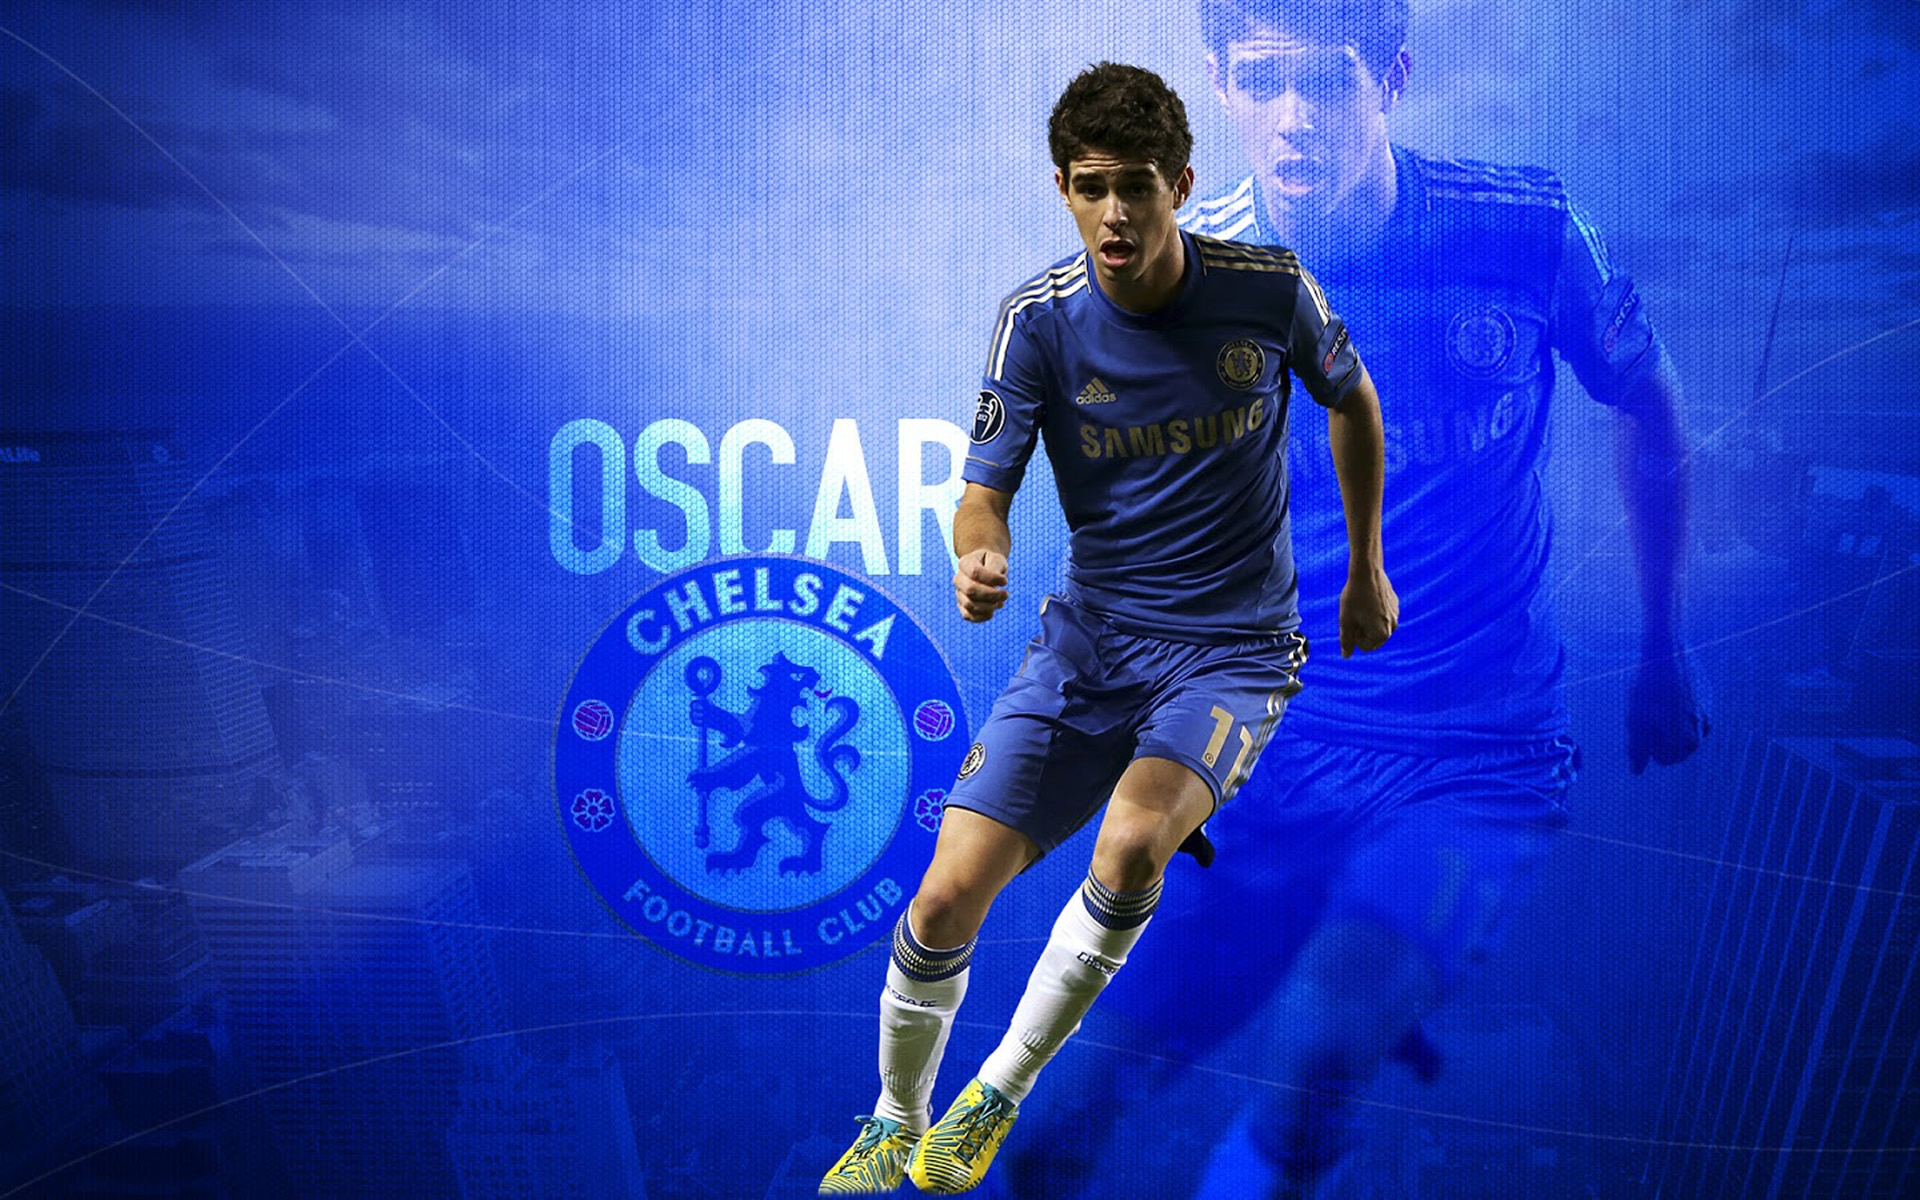 Oscar Dos Santos Chelsea 2014 Wallpaper - Chelsea Fc - HD Wallpaper 